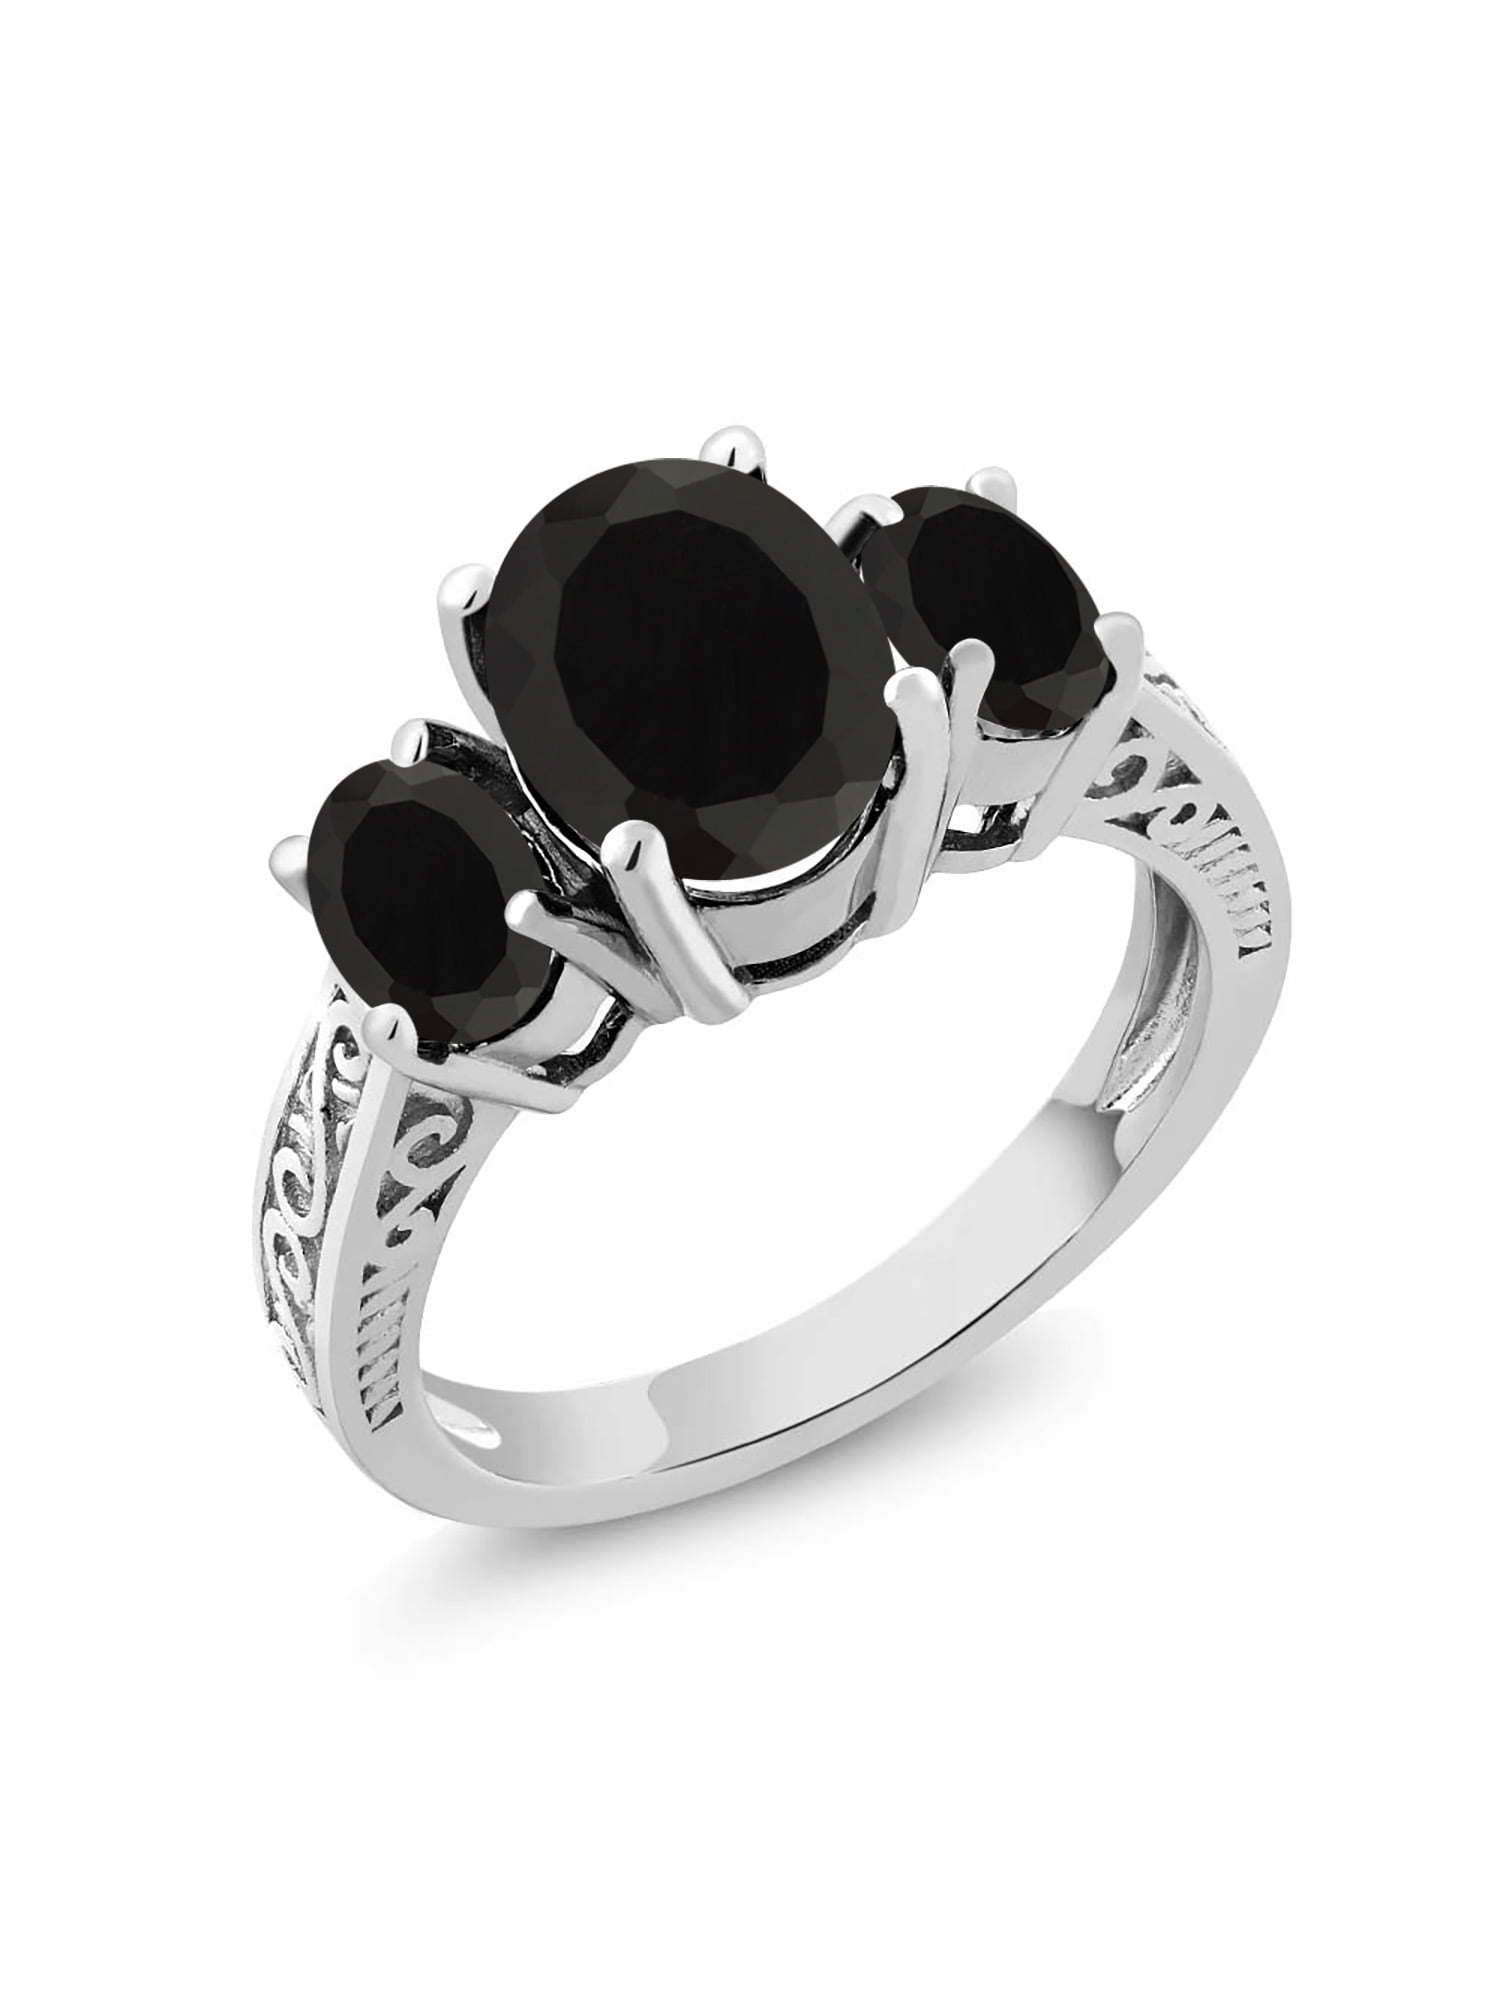 Onyx jewelry Custom gemstone ring Sterling silver ring Natural onyx ring Black stone ring Boho ring Onyx ring for women